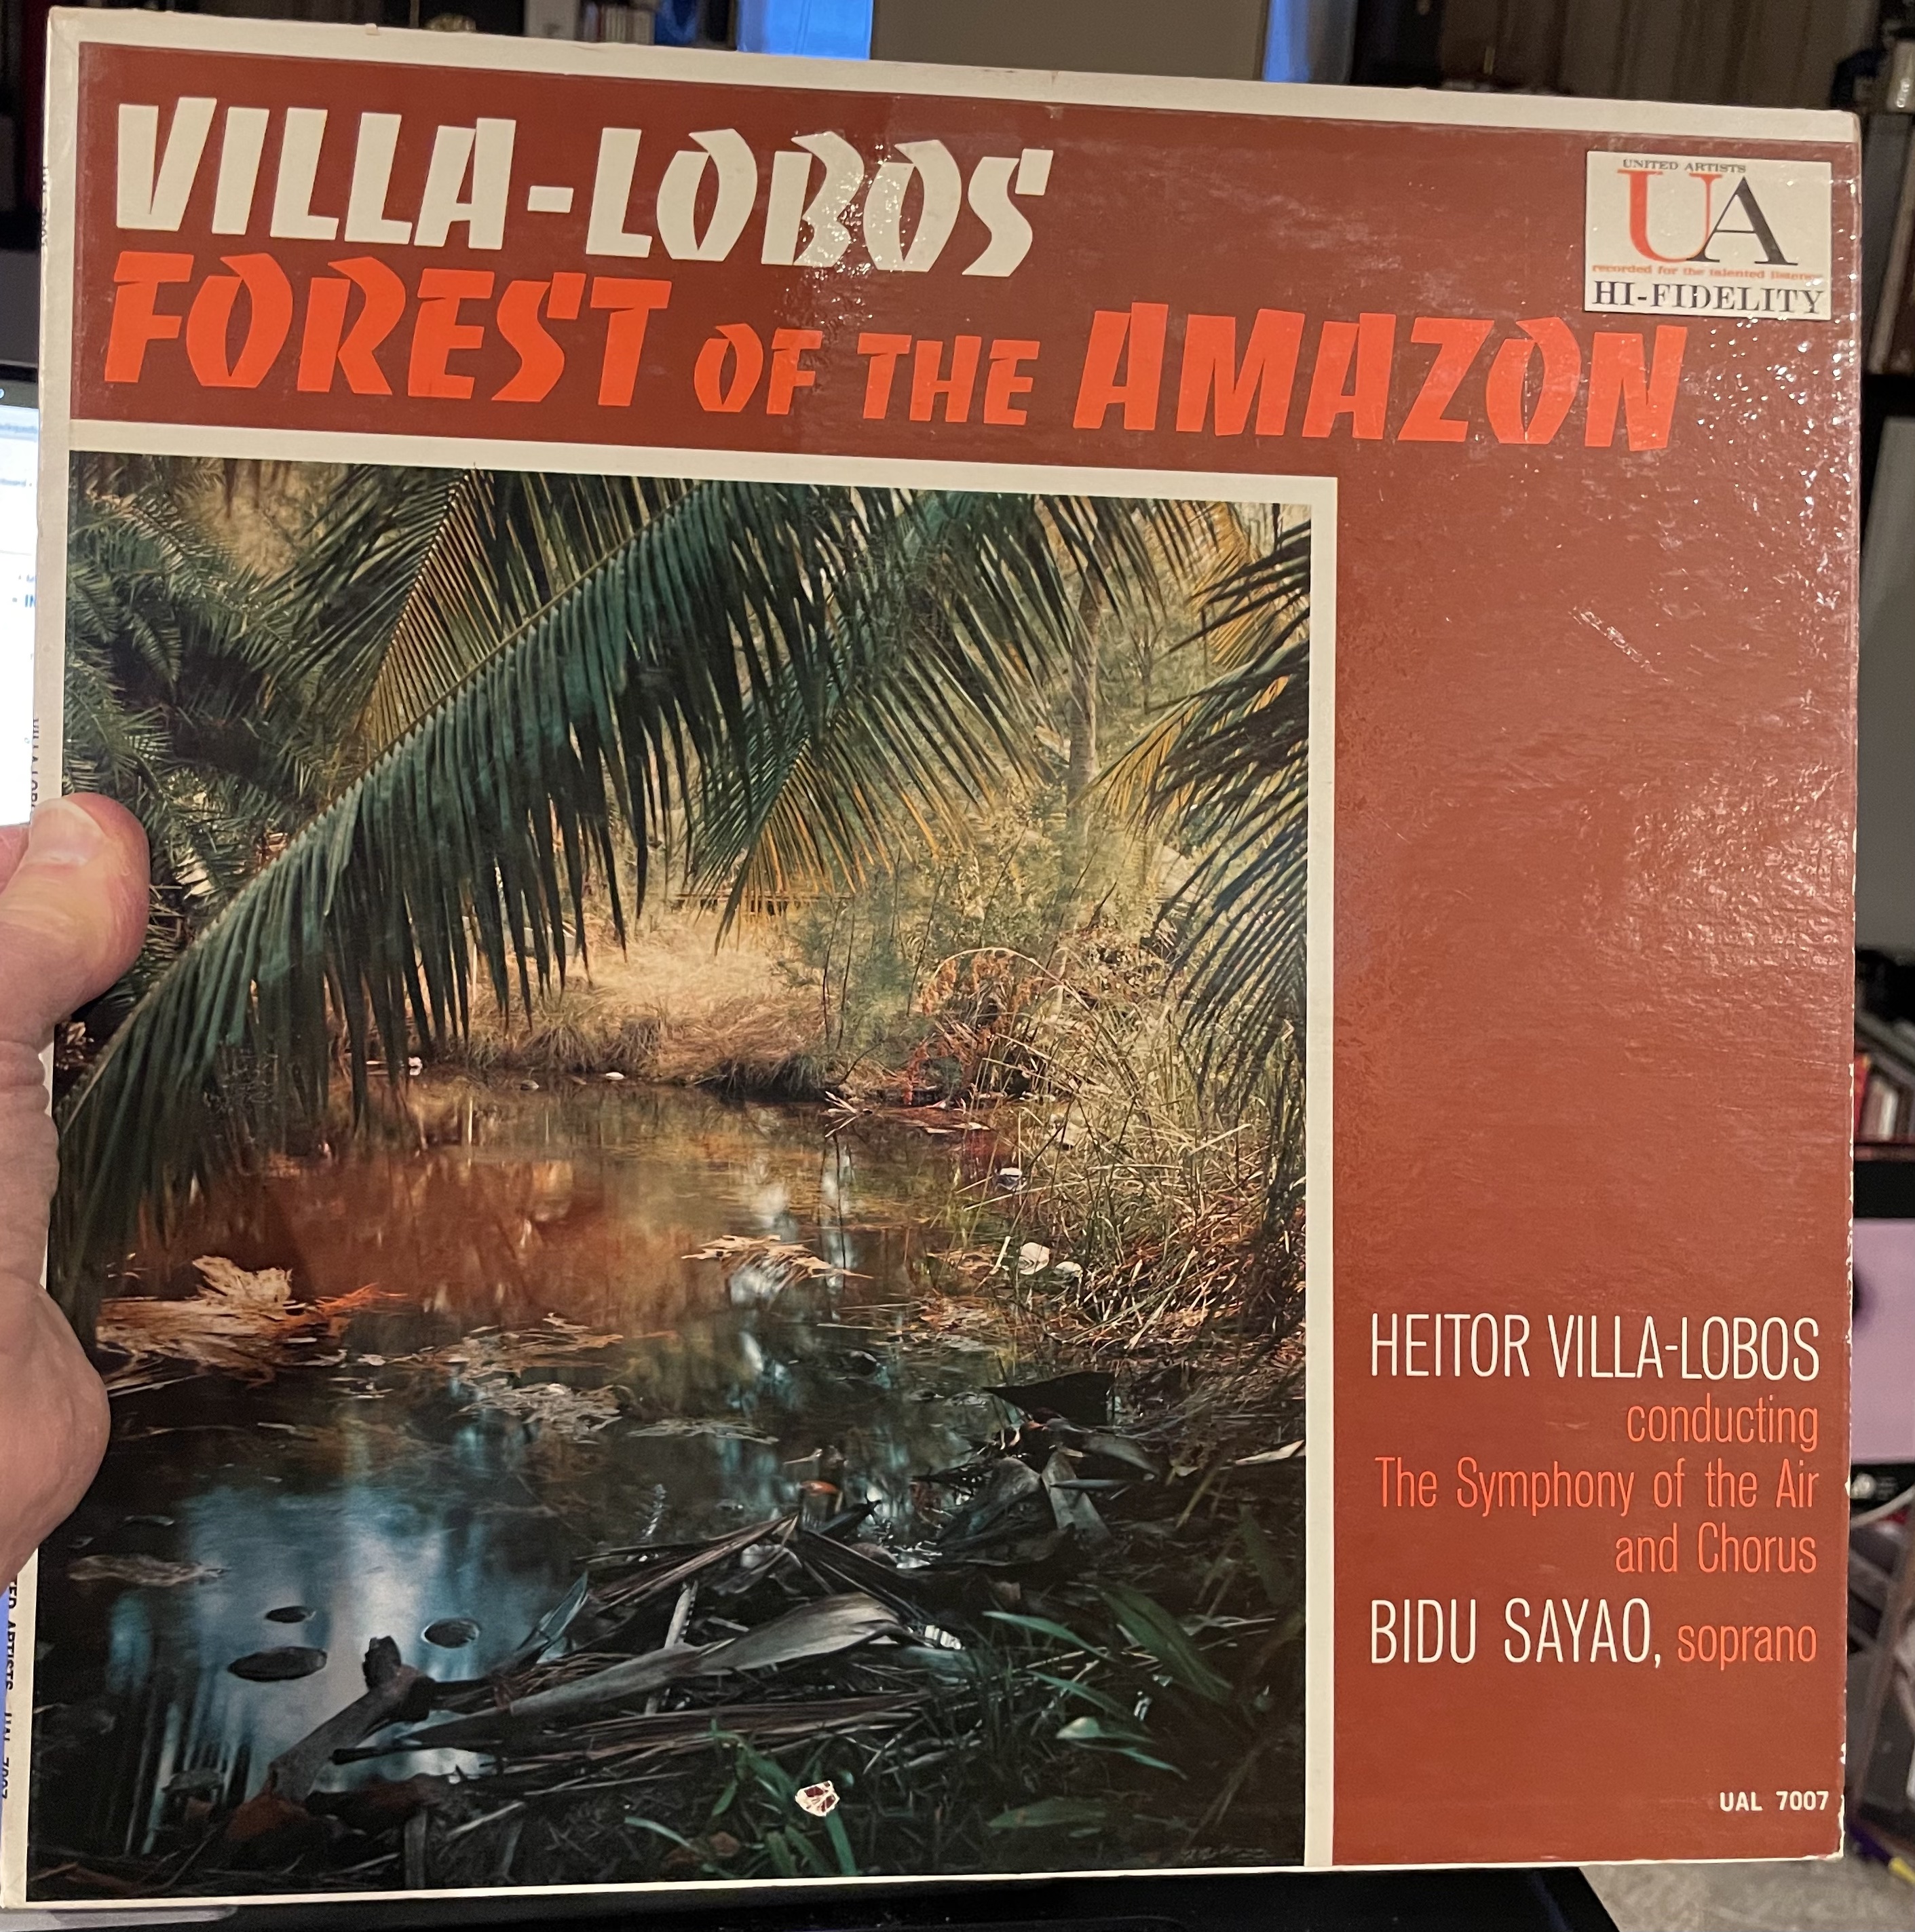 Villa-Lobos "Forest of the Amazon"